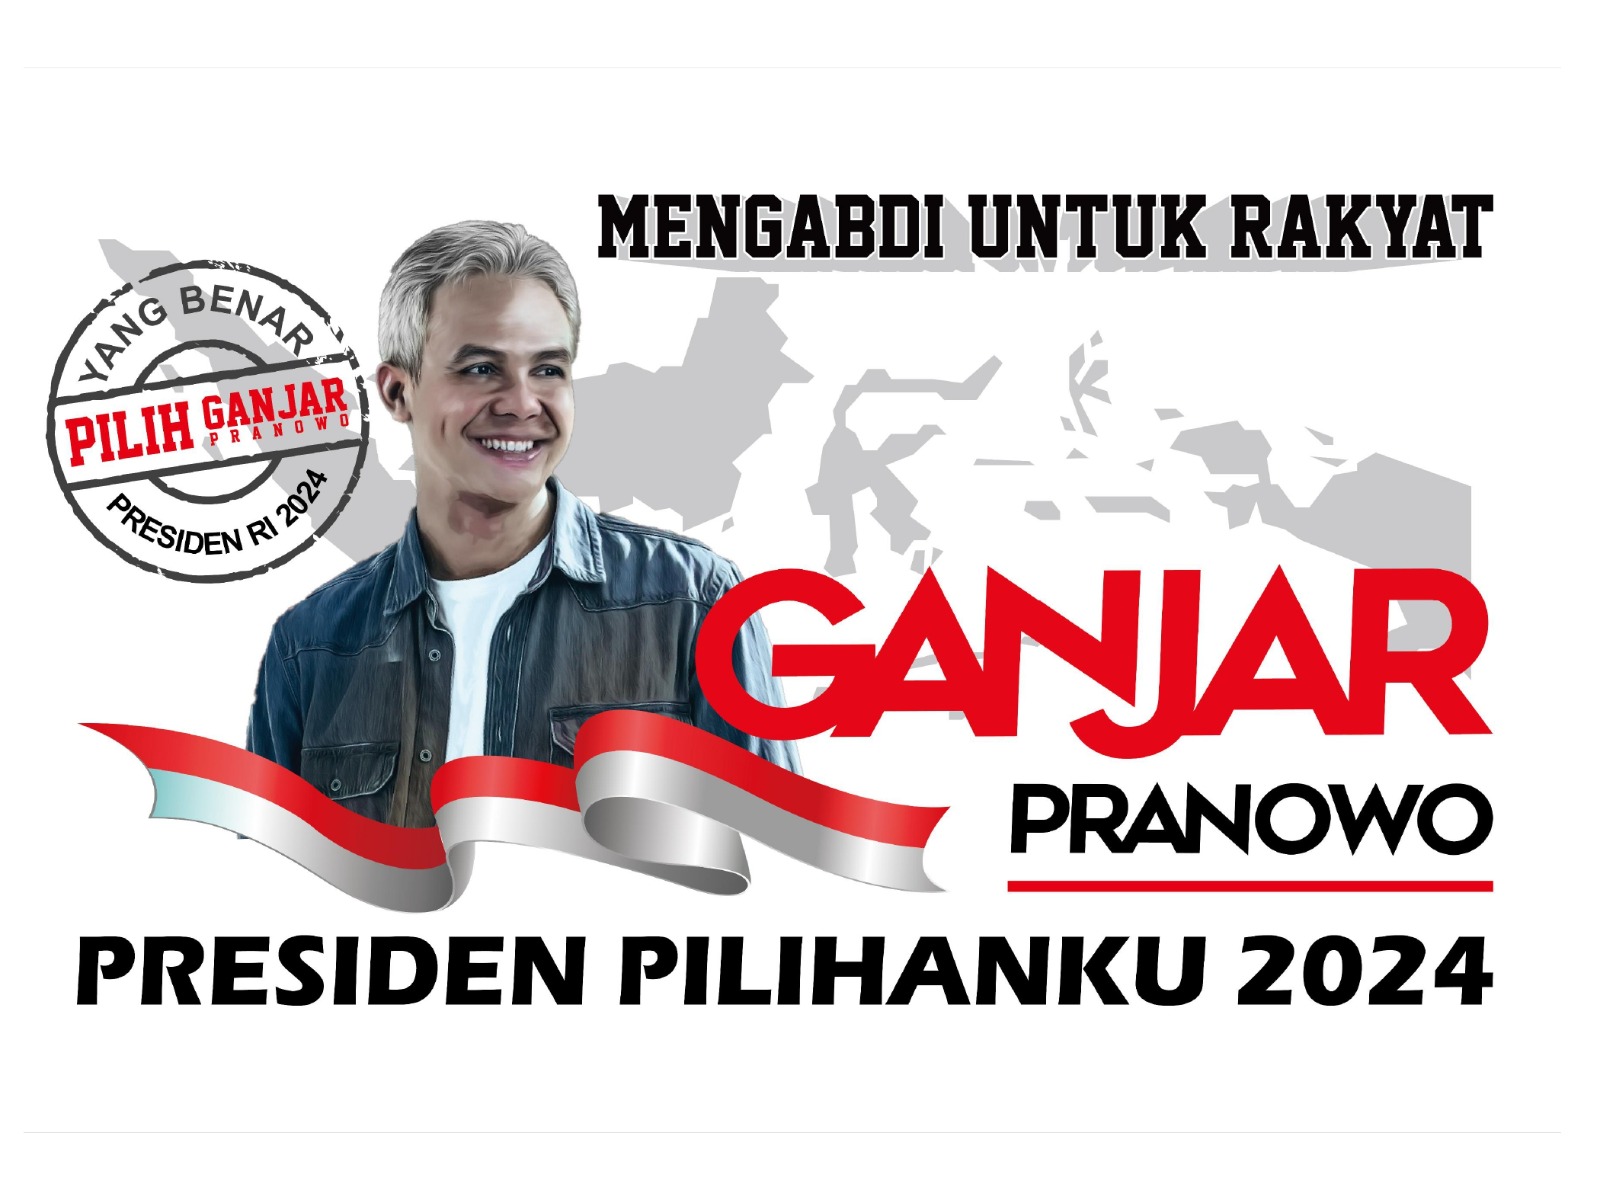 Mengabdi Untuk Rakyat, Ganjar Pranowo Presiden Pilihanku 2024